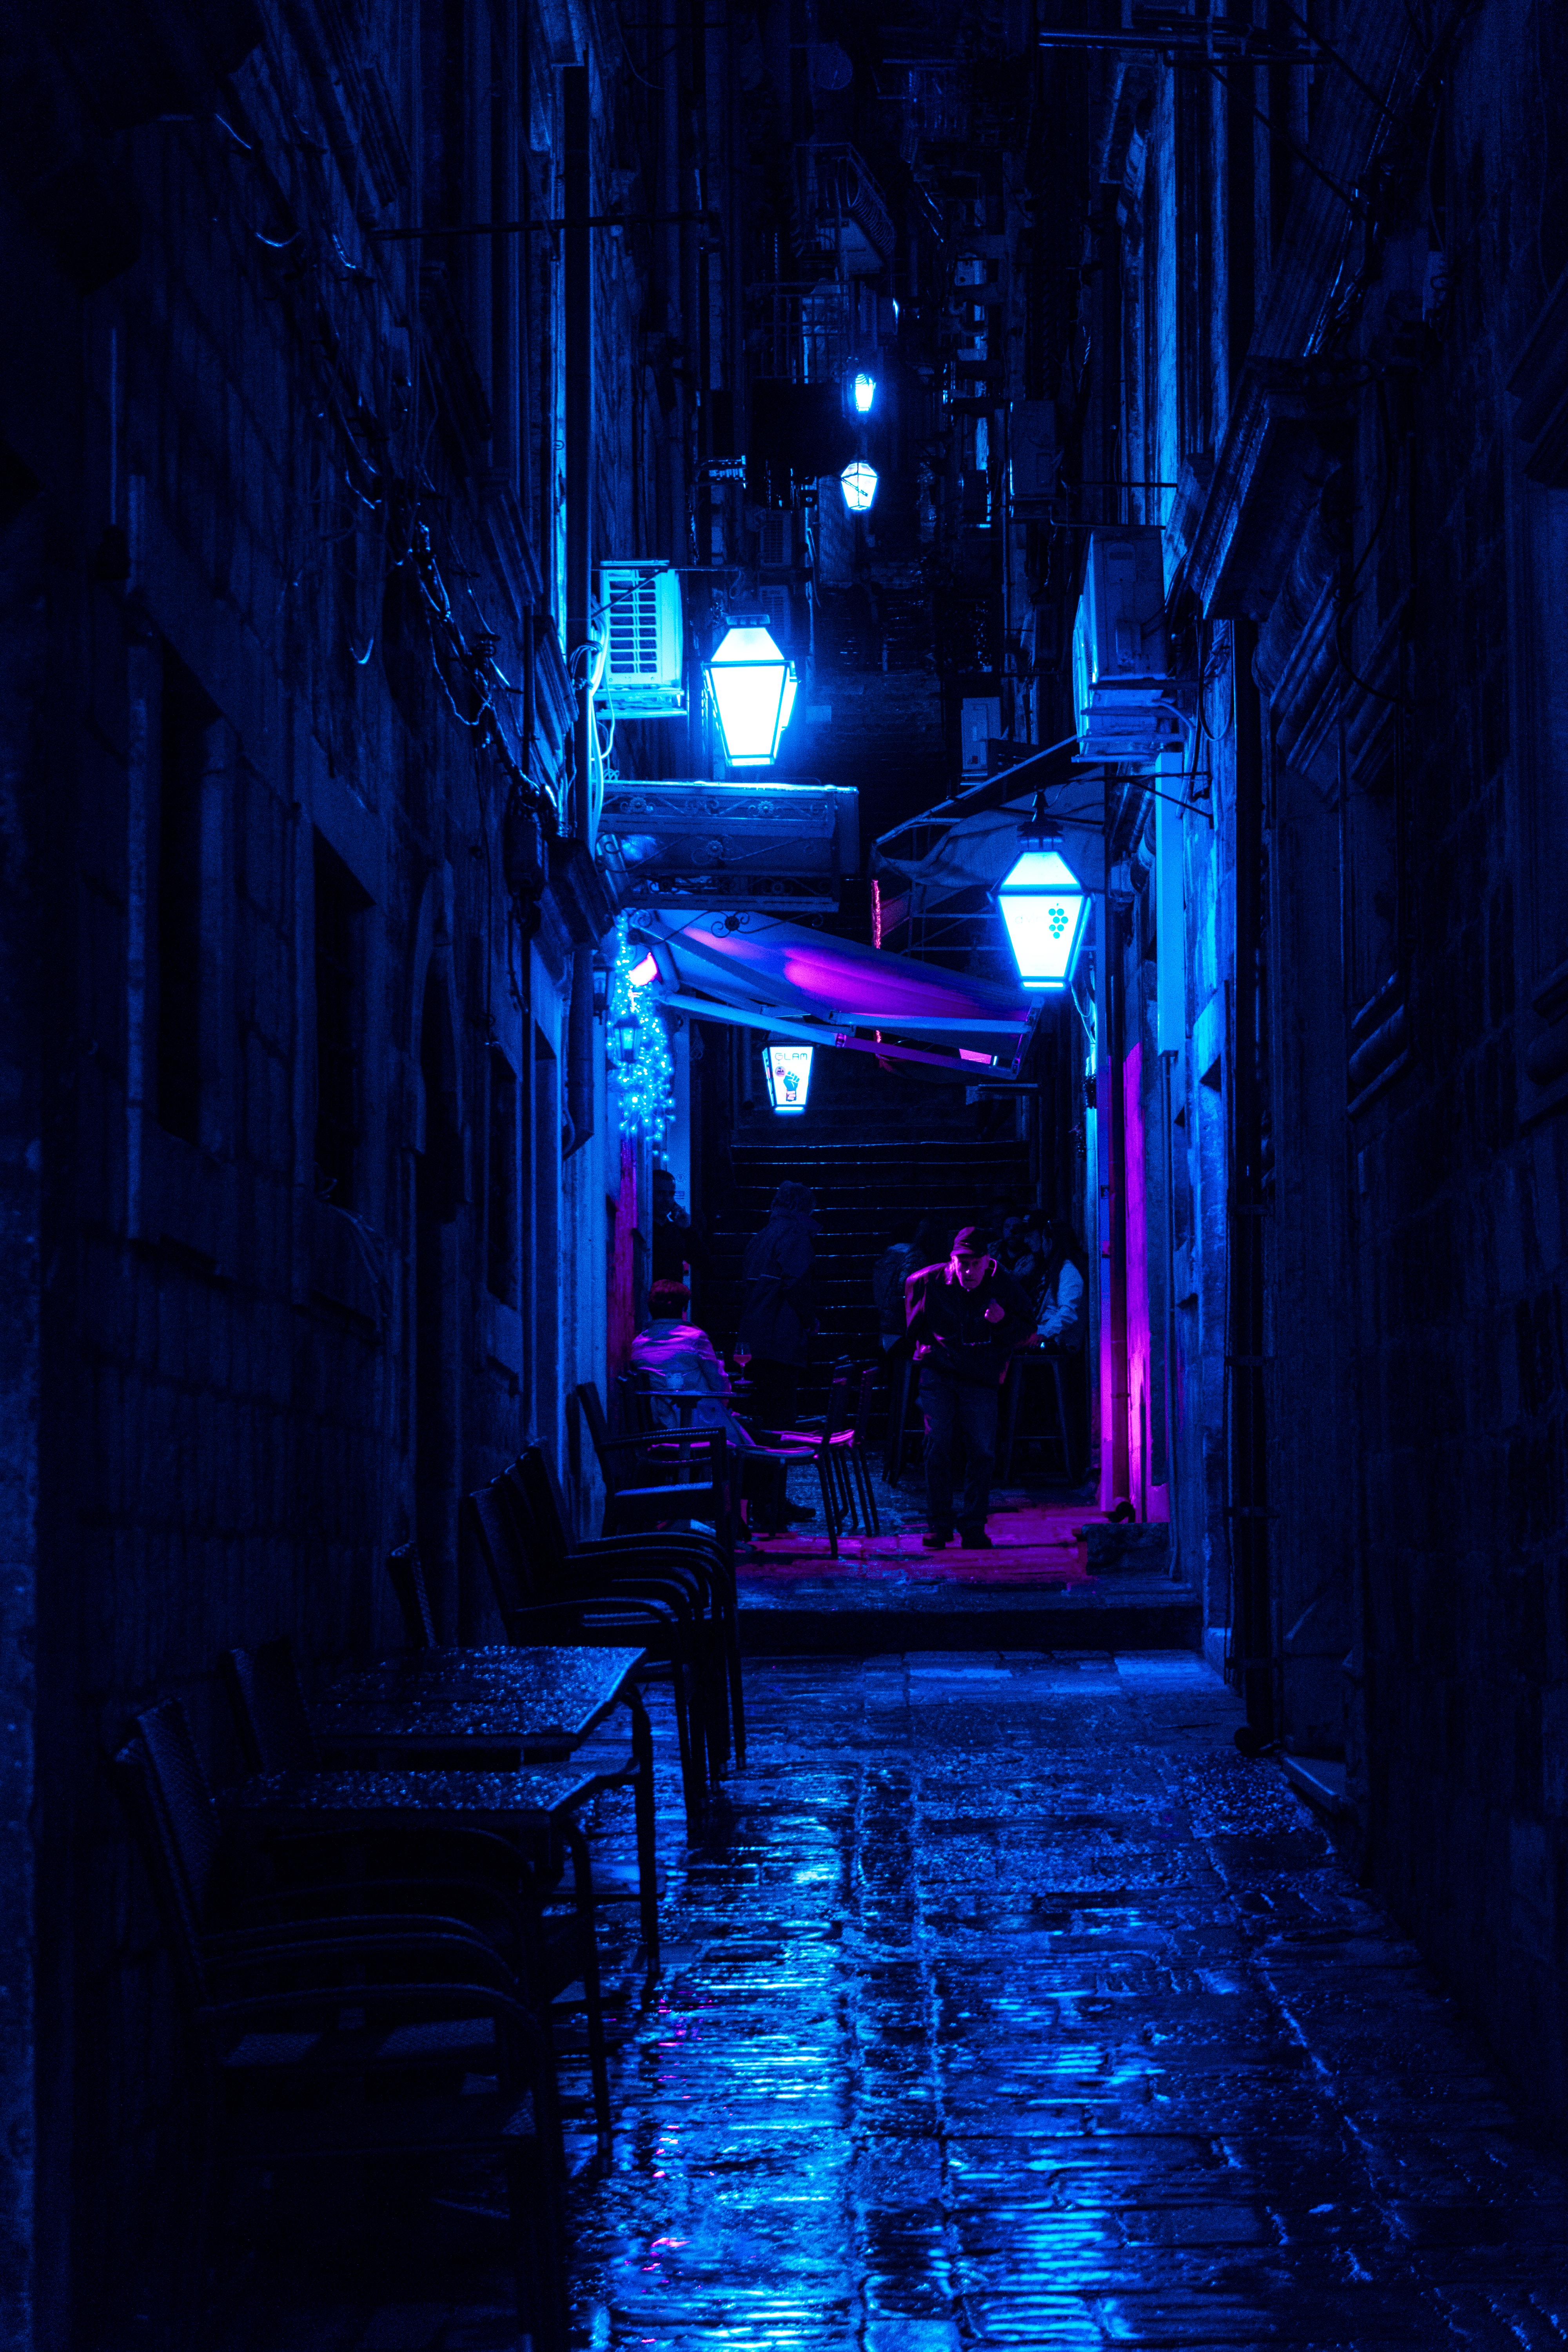 Night Street Photos, Download The BEST Free Night Street Stock